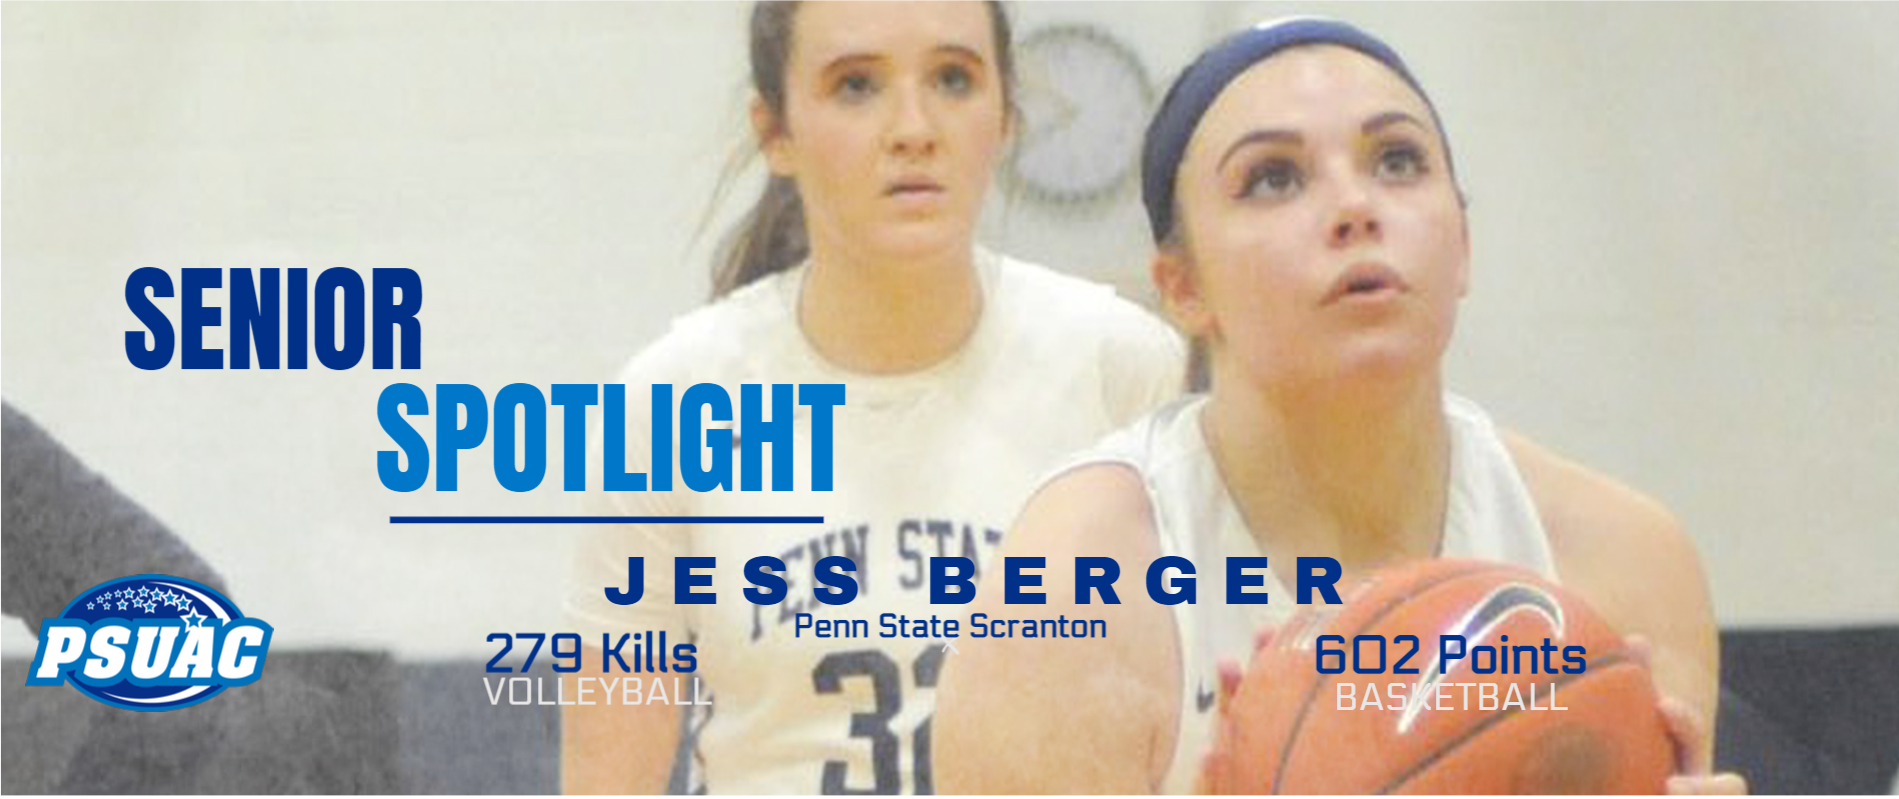 Penn State Scranton's Jess Berger.